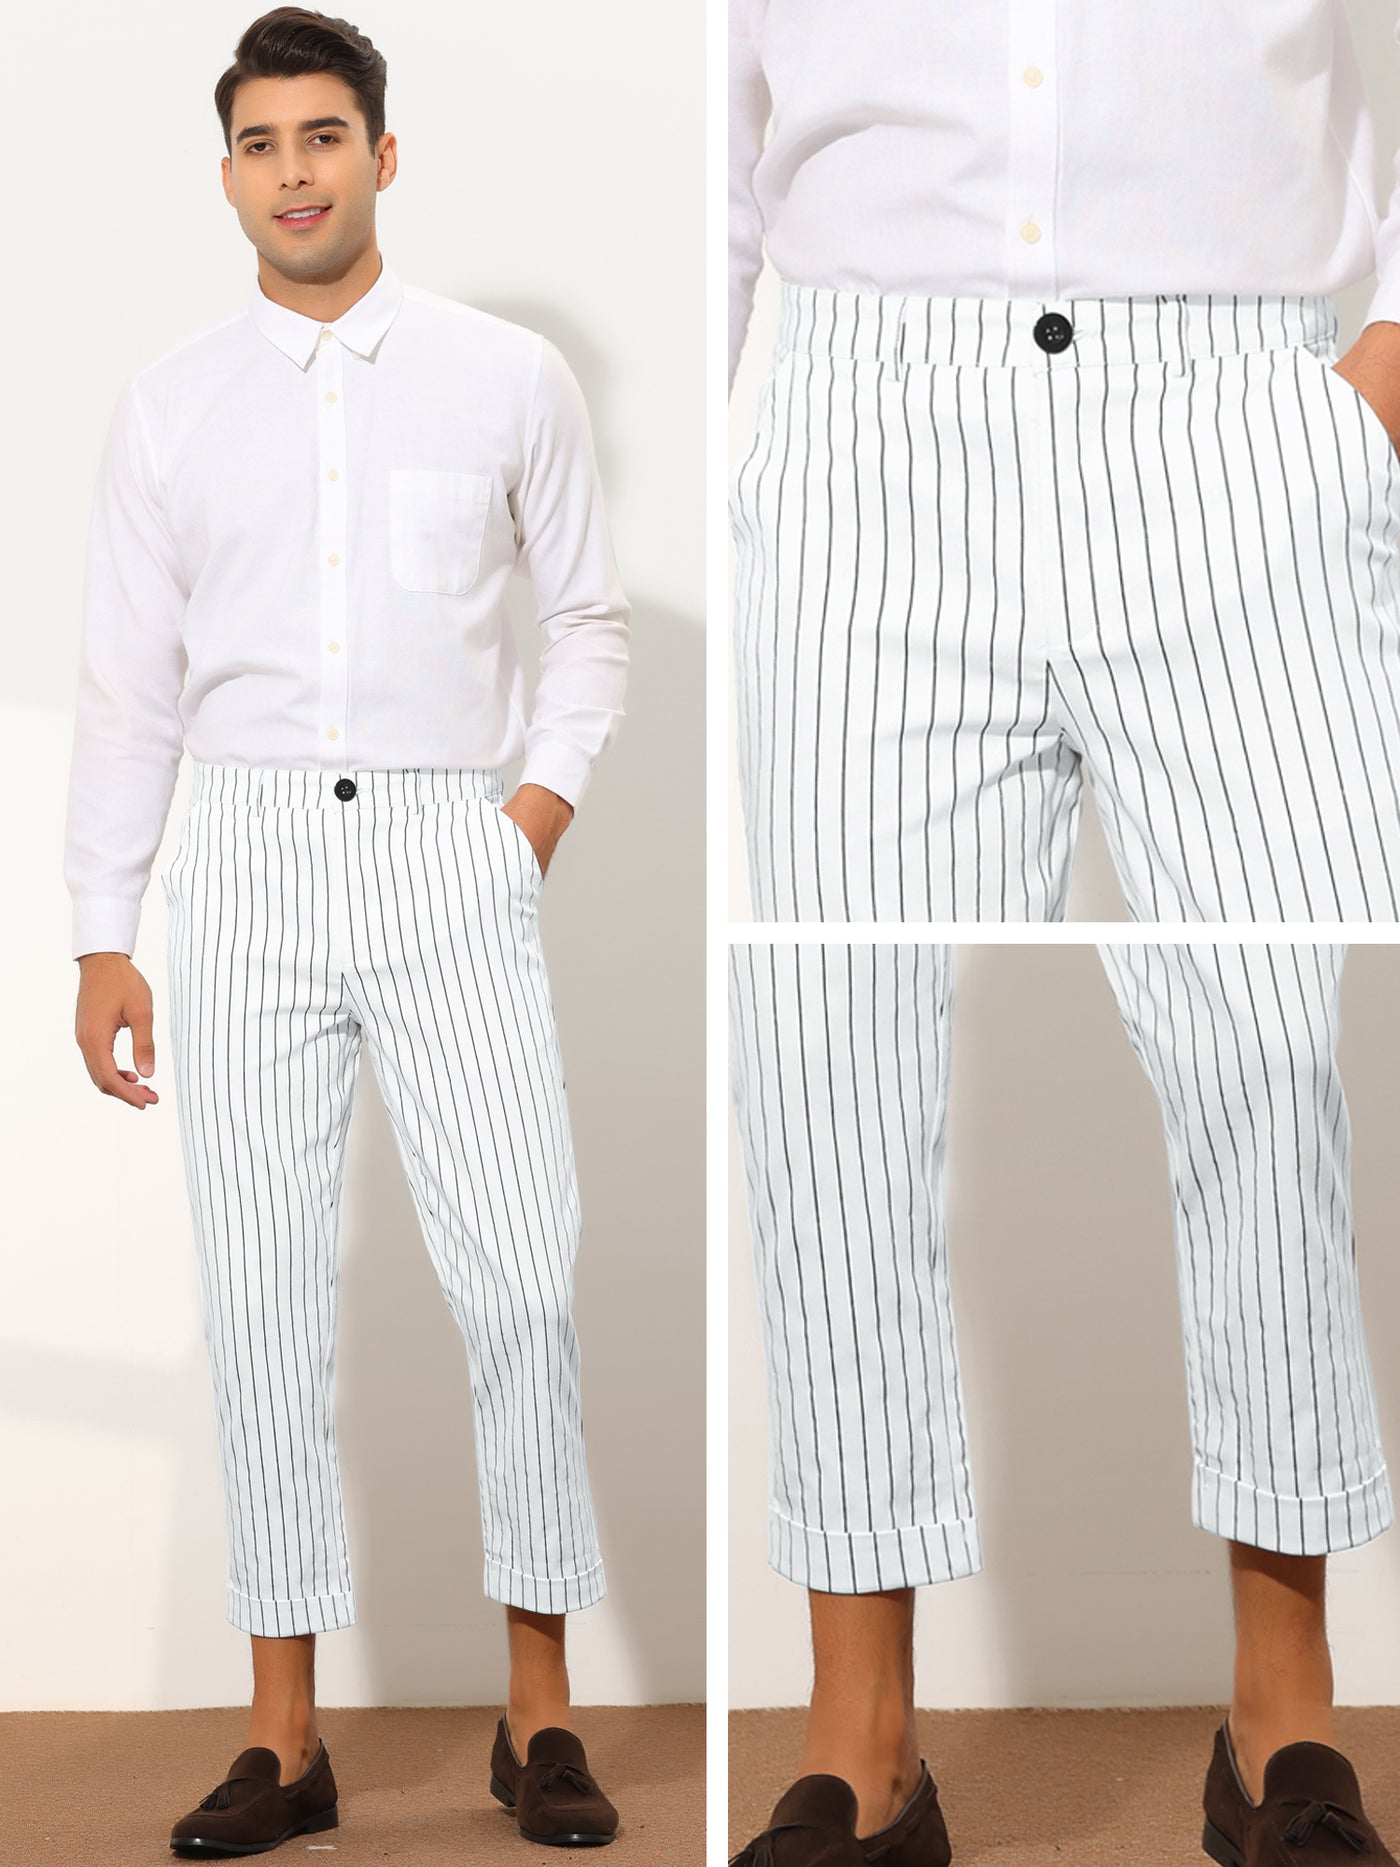 Bublédon Men's Striped Slim Fit Flat Front Cropped Ankle Length Office Dress Pants